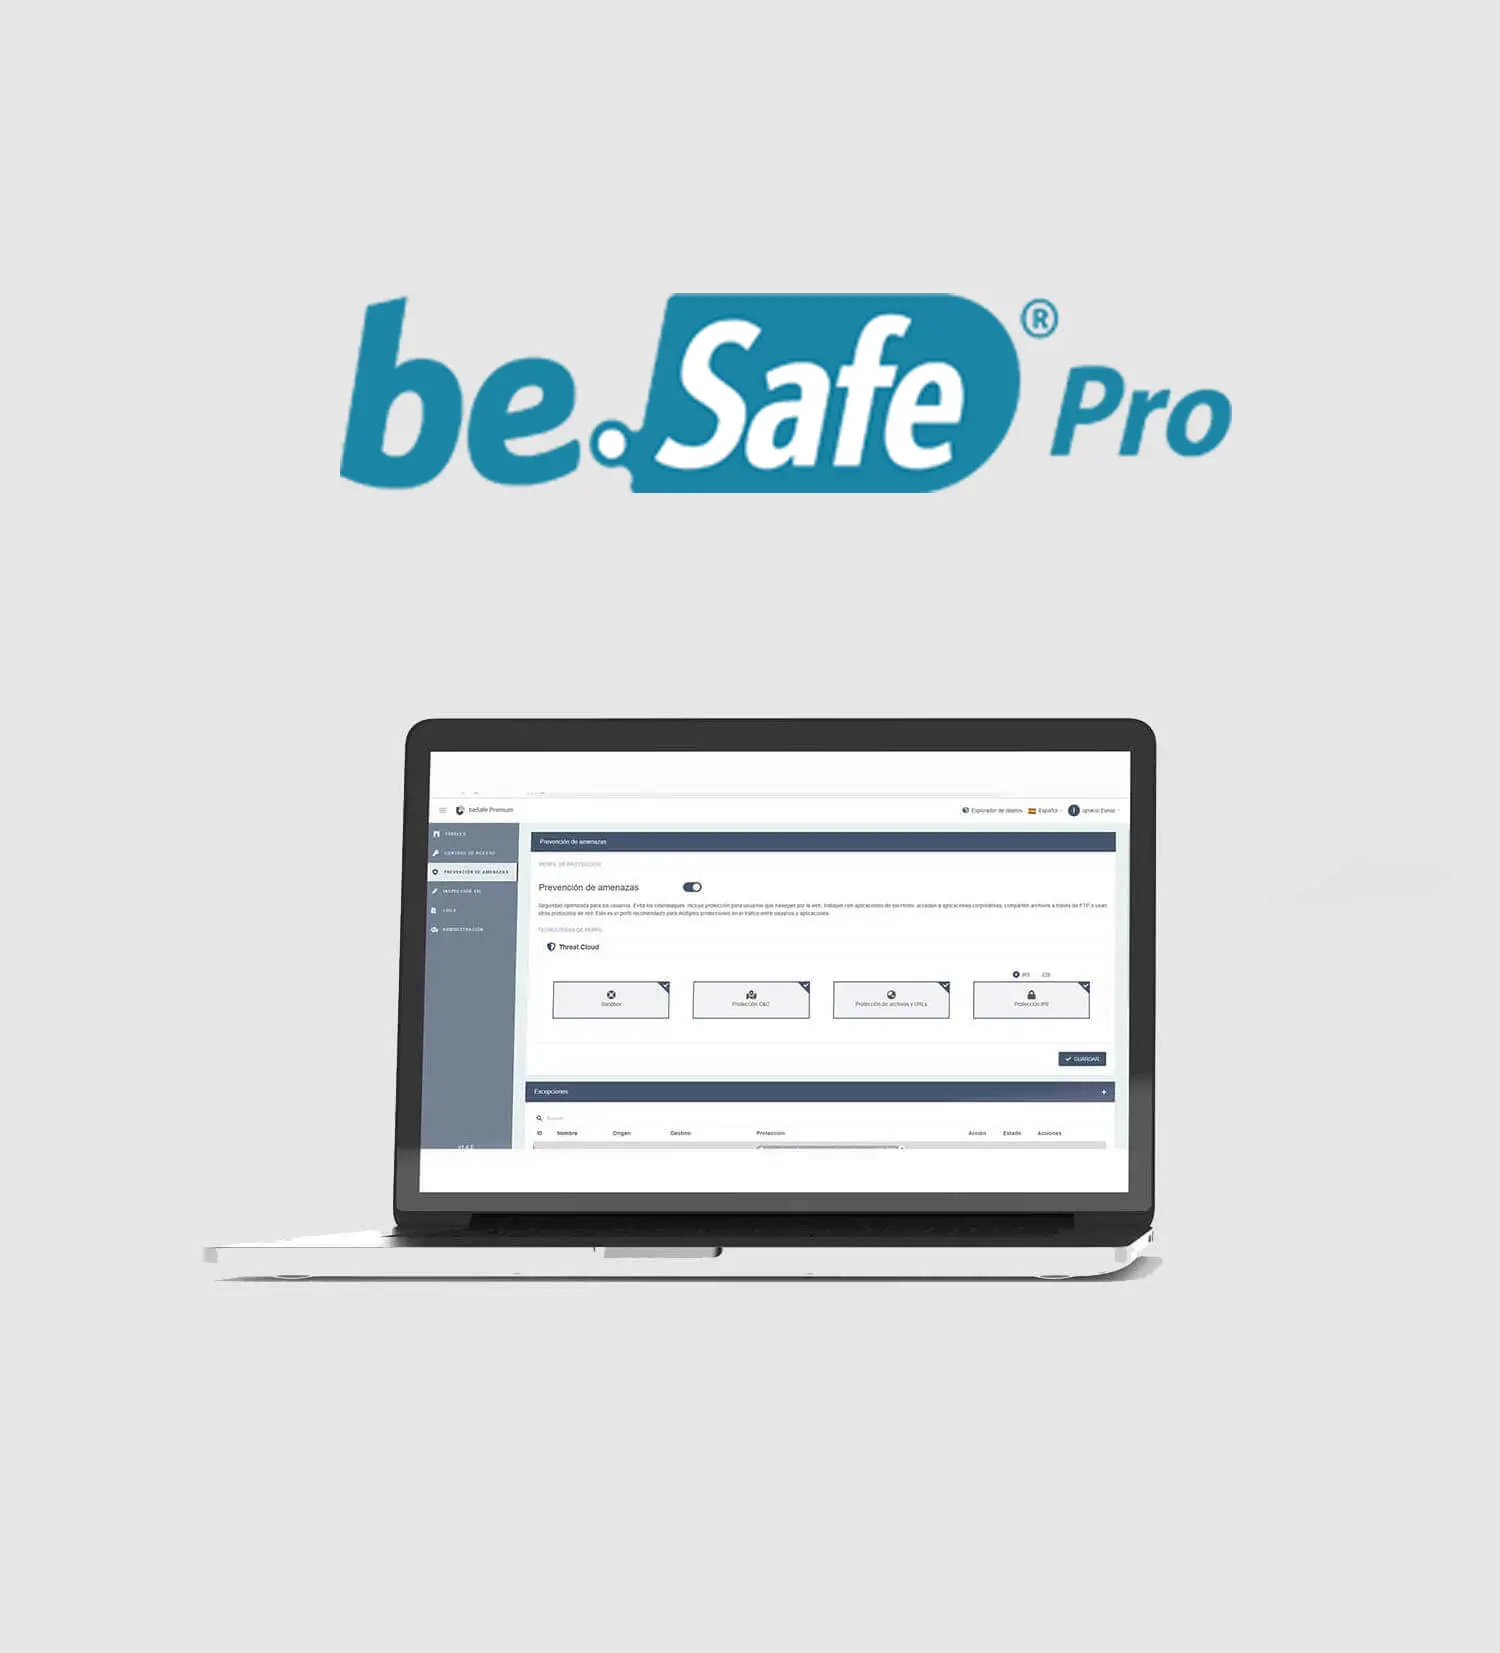 be.Safe Pro key benefits Teldat